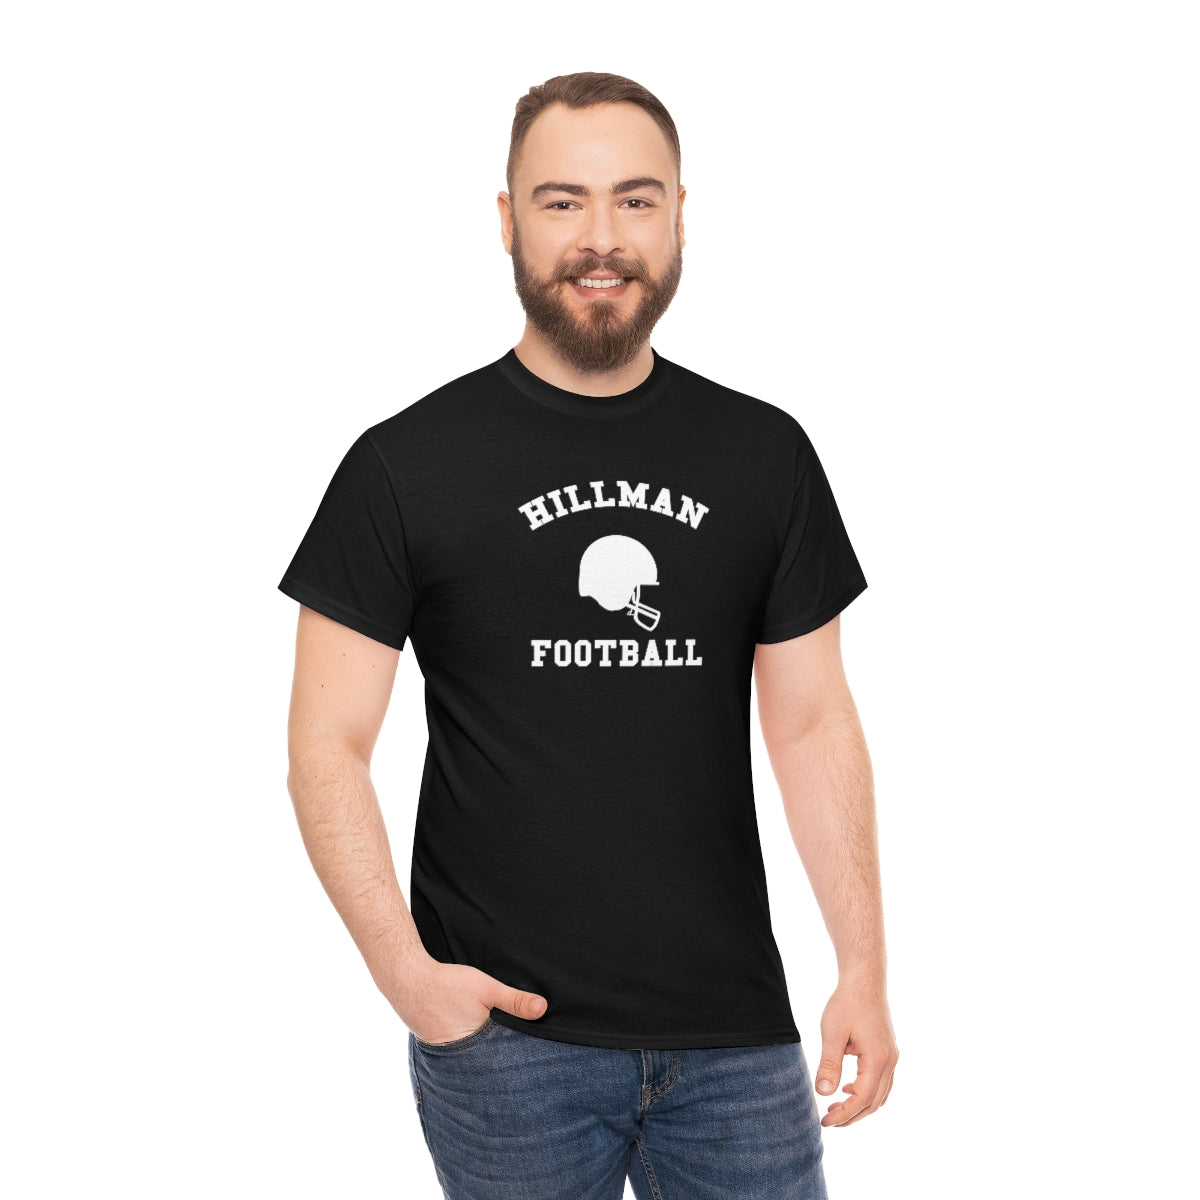 Hillman Football: White Lettering Unisex Short Sleeve Tee